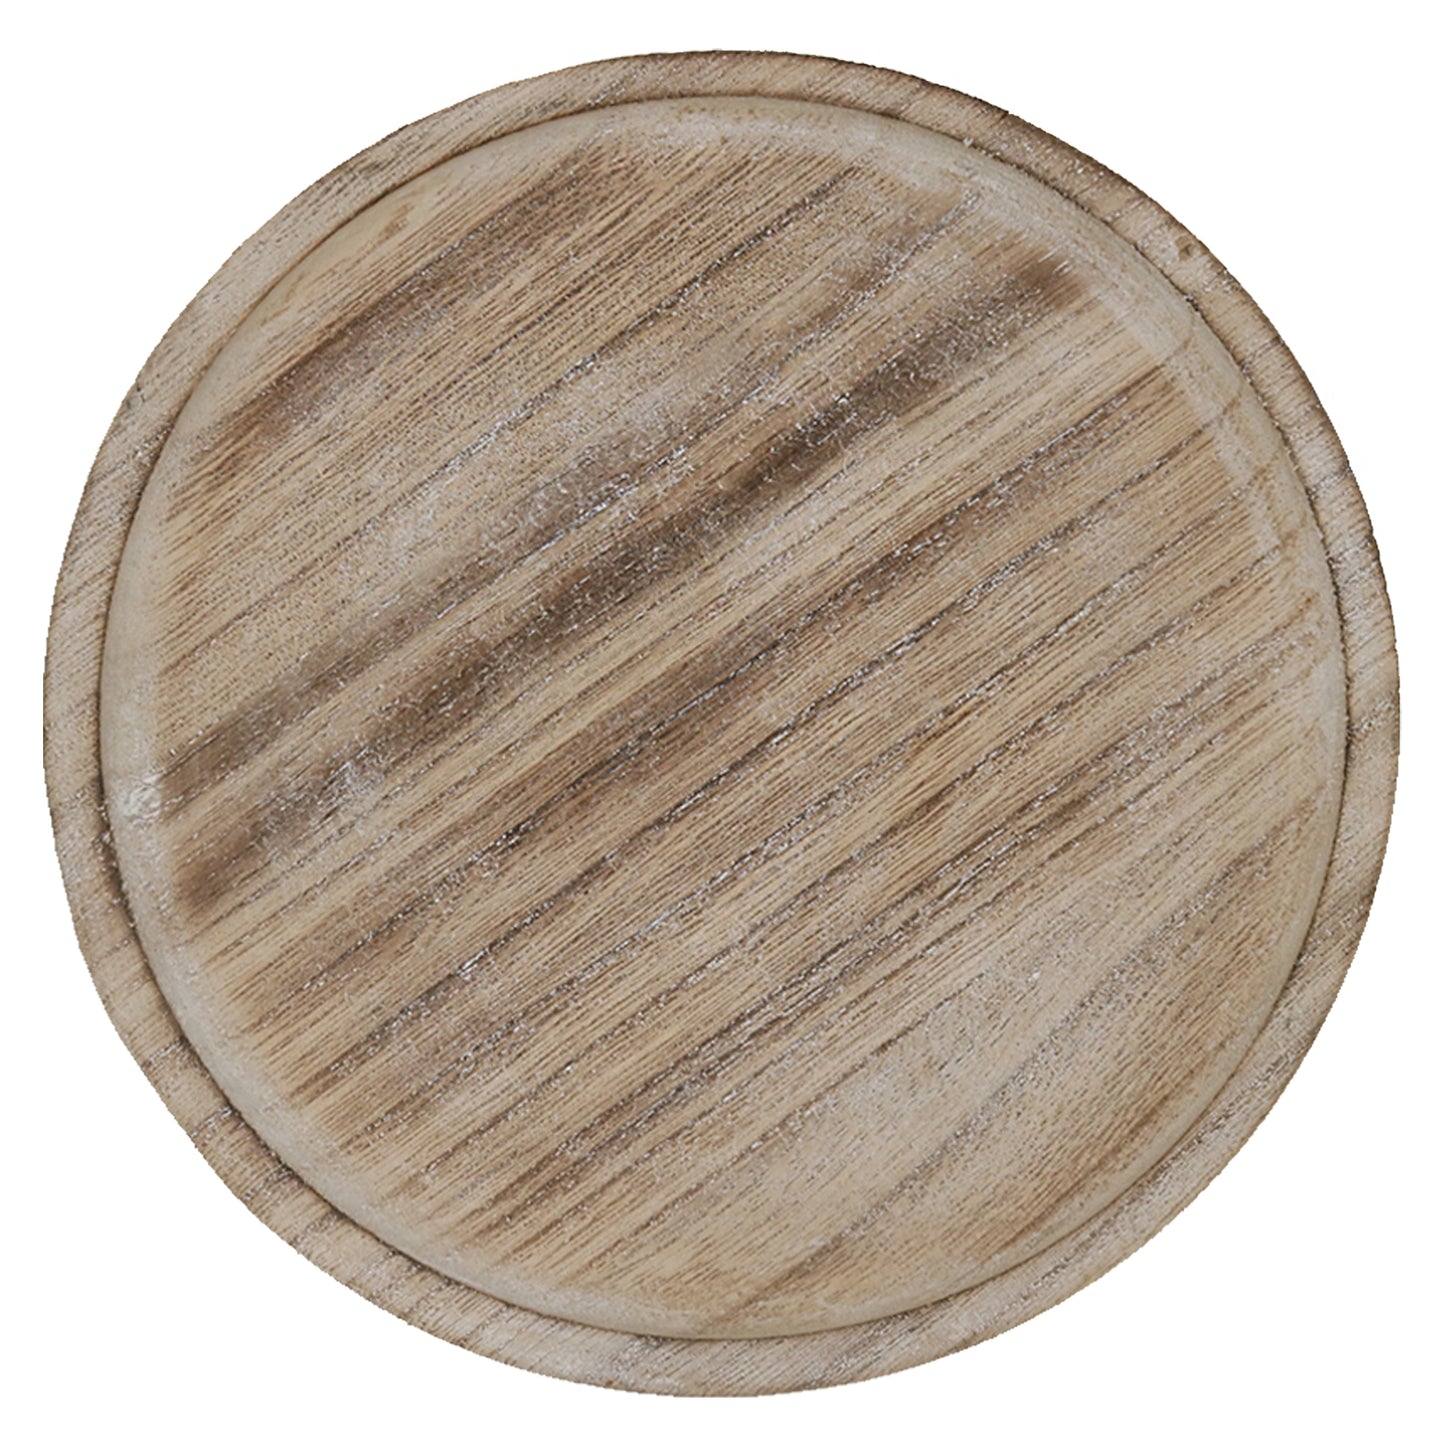 Rustic Round Wood Tray-Handmade